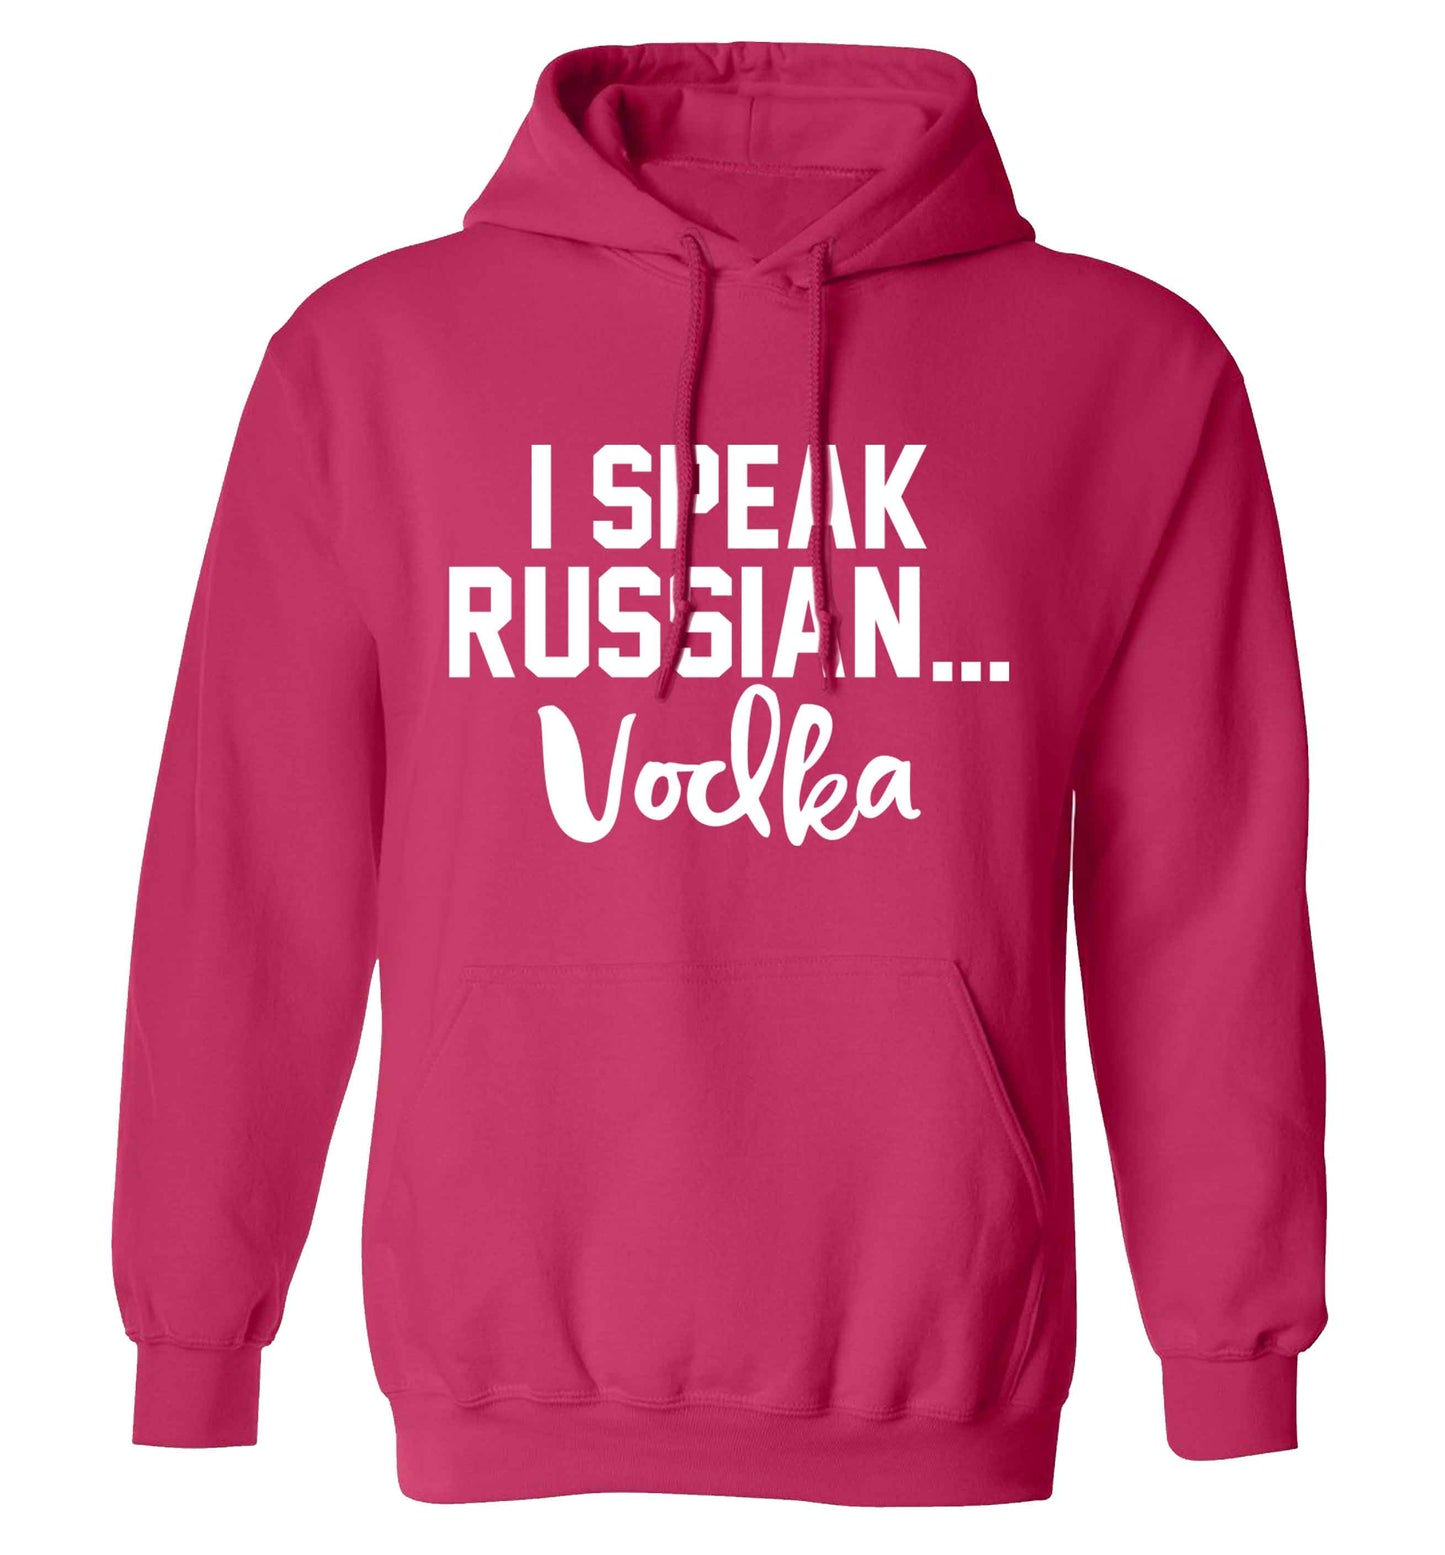 I speak russian...vodka adults unisex pink hoodie 2XL